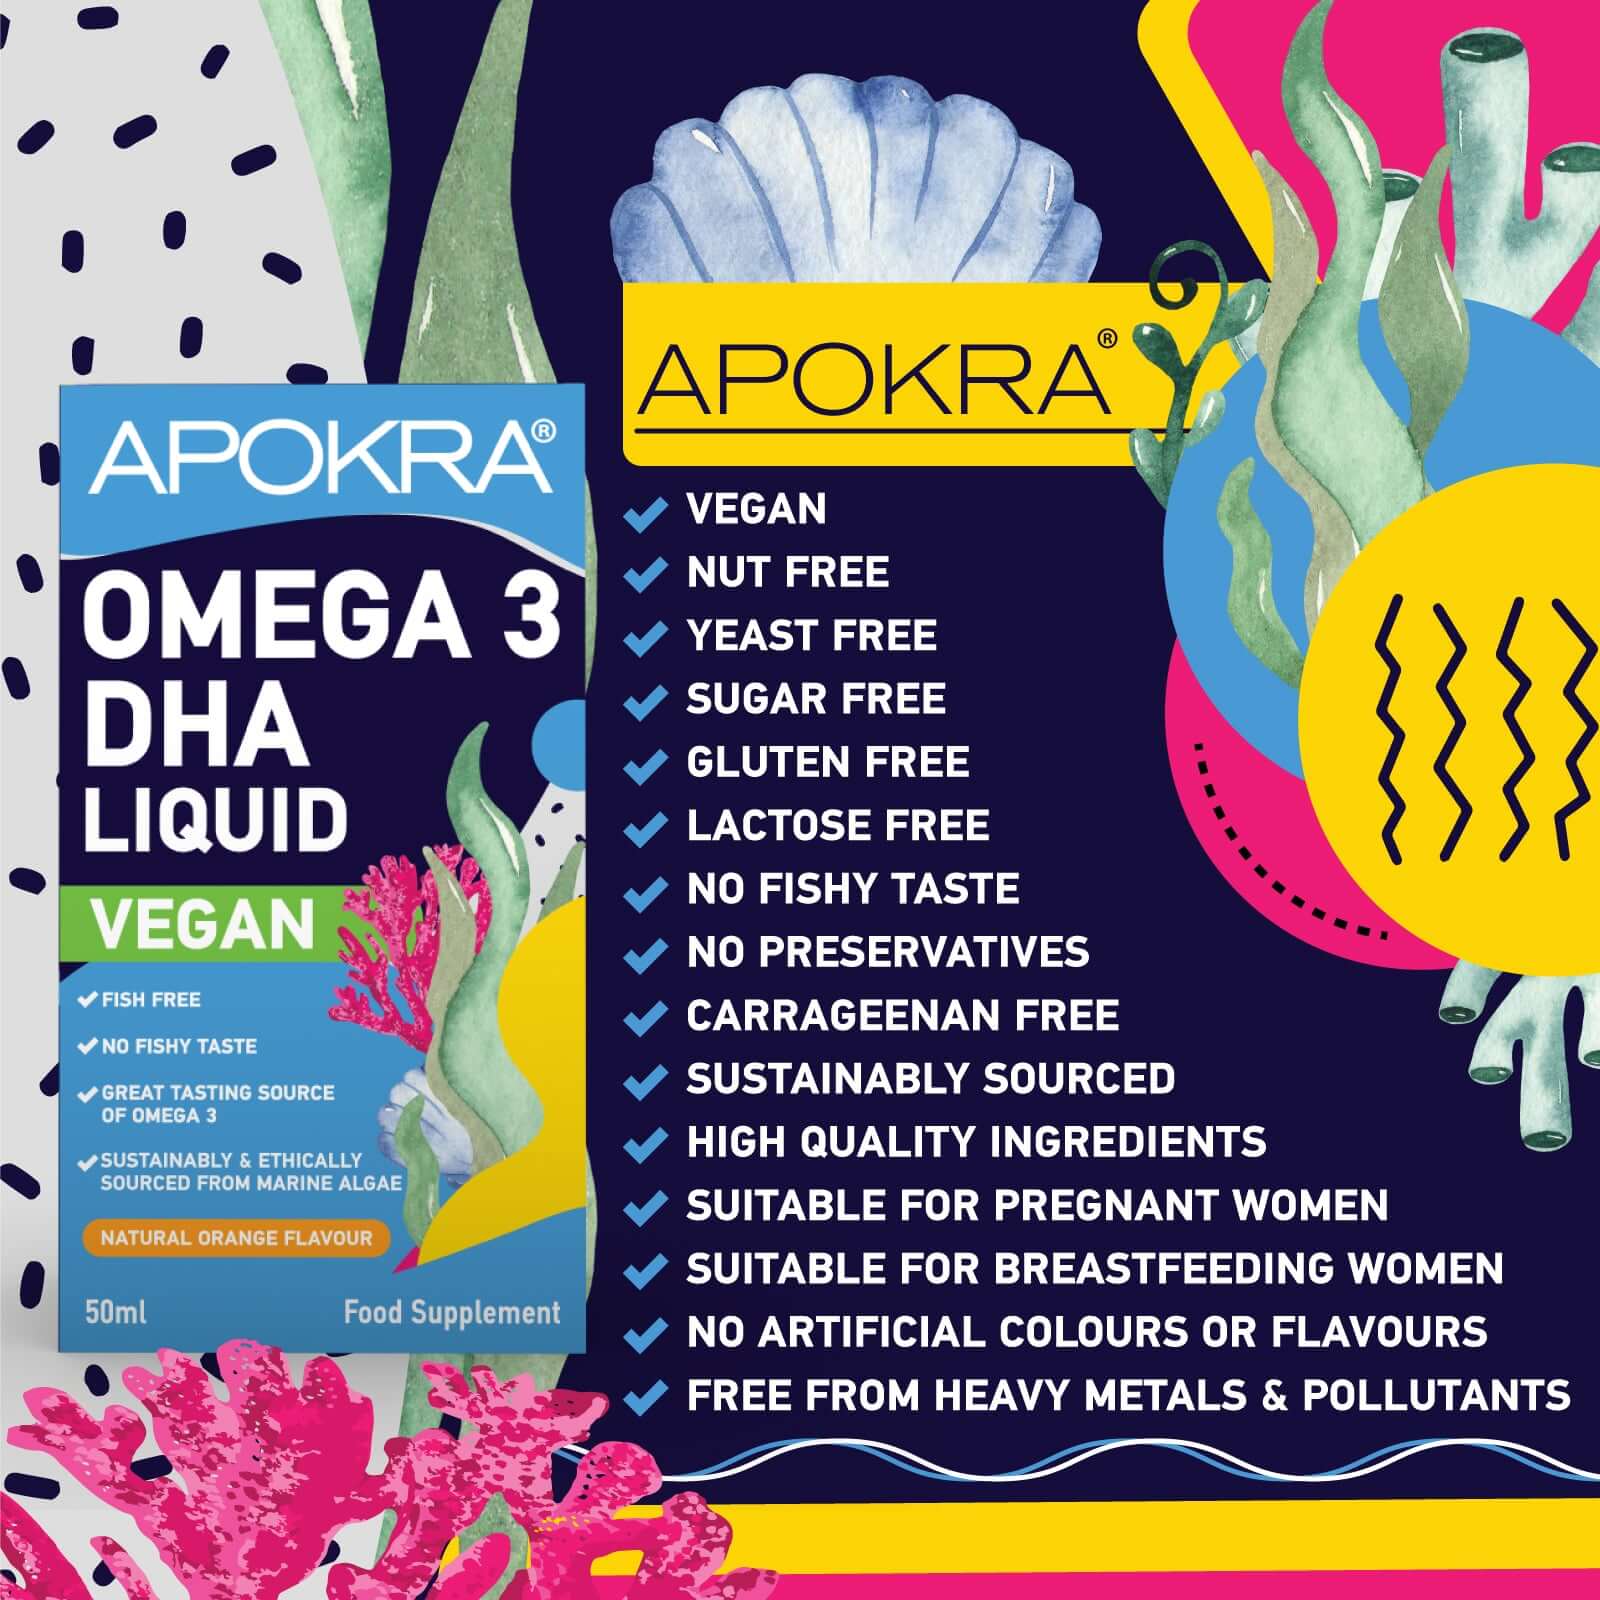 Benefits of algae omega 3 DHA liquid - APOKRA